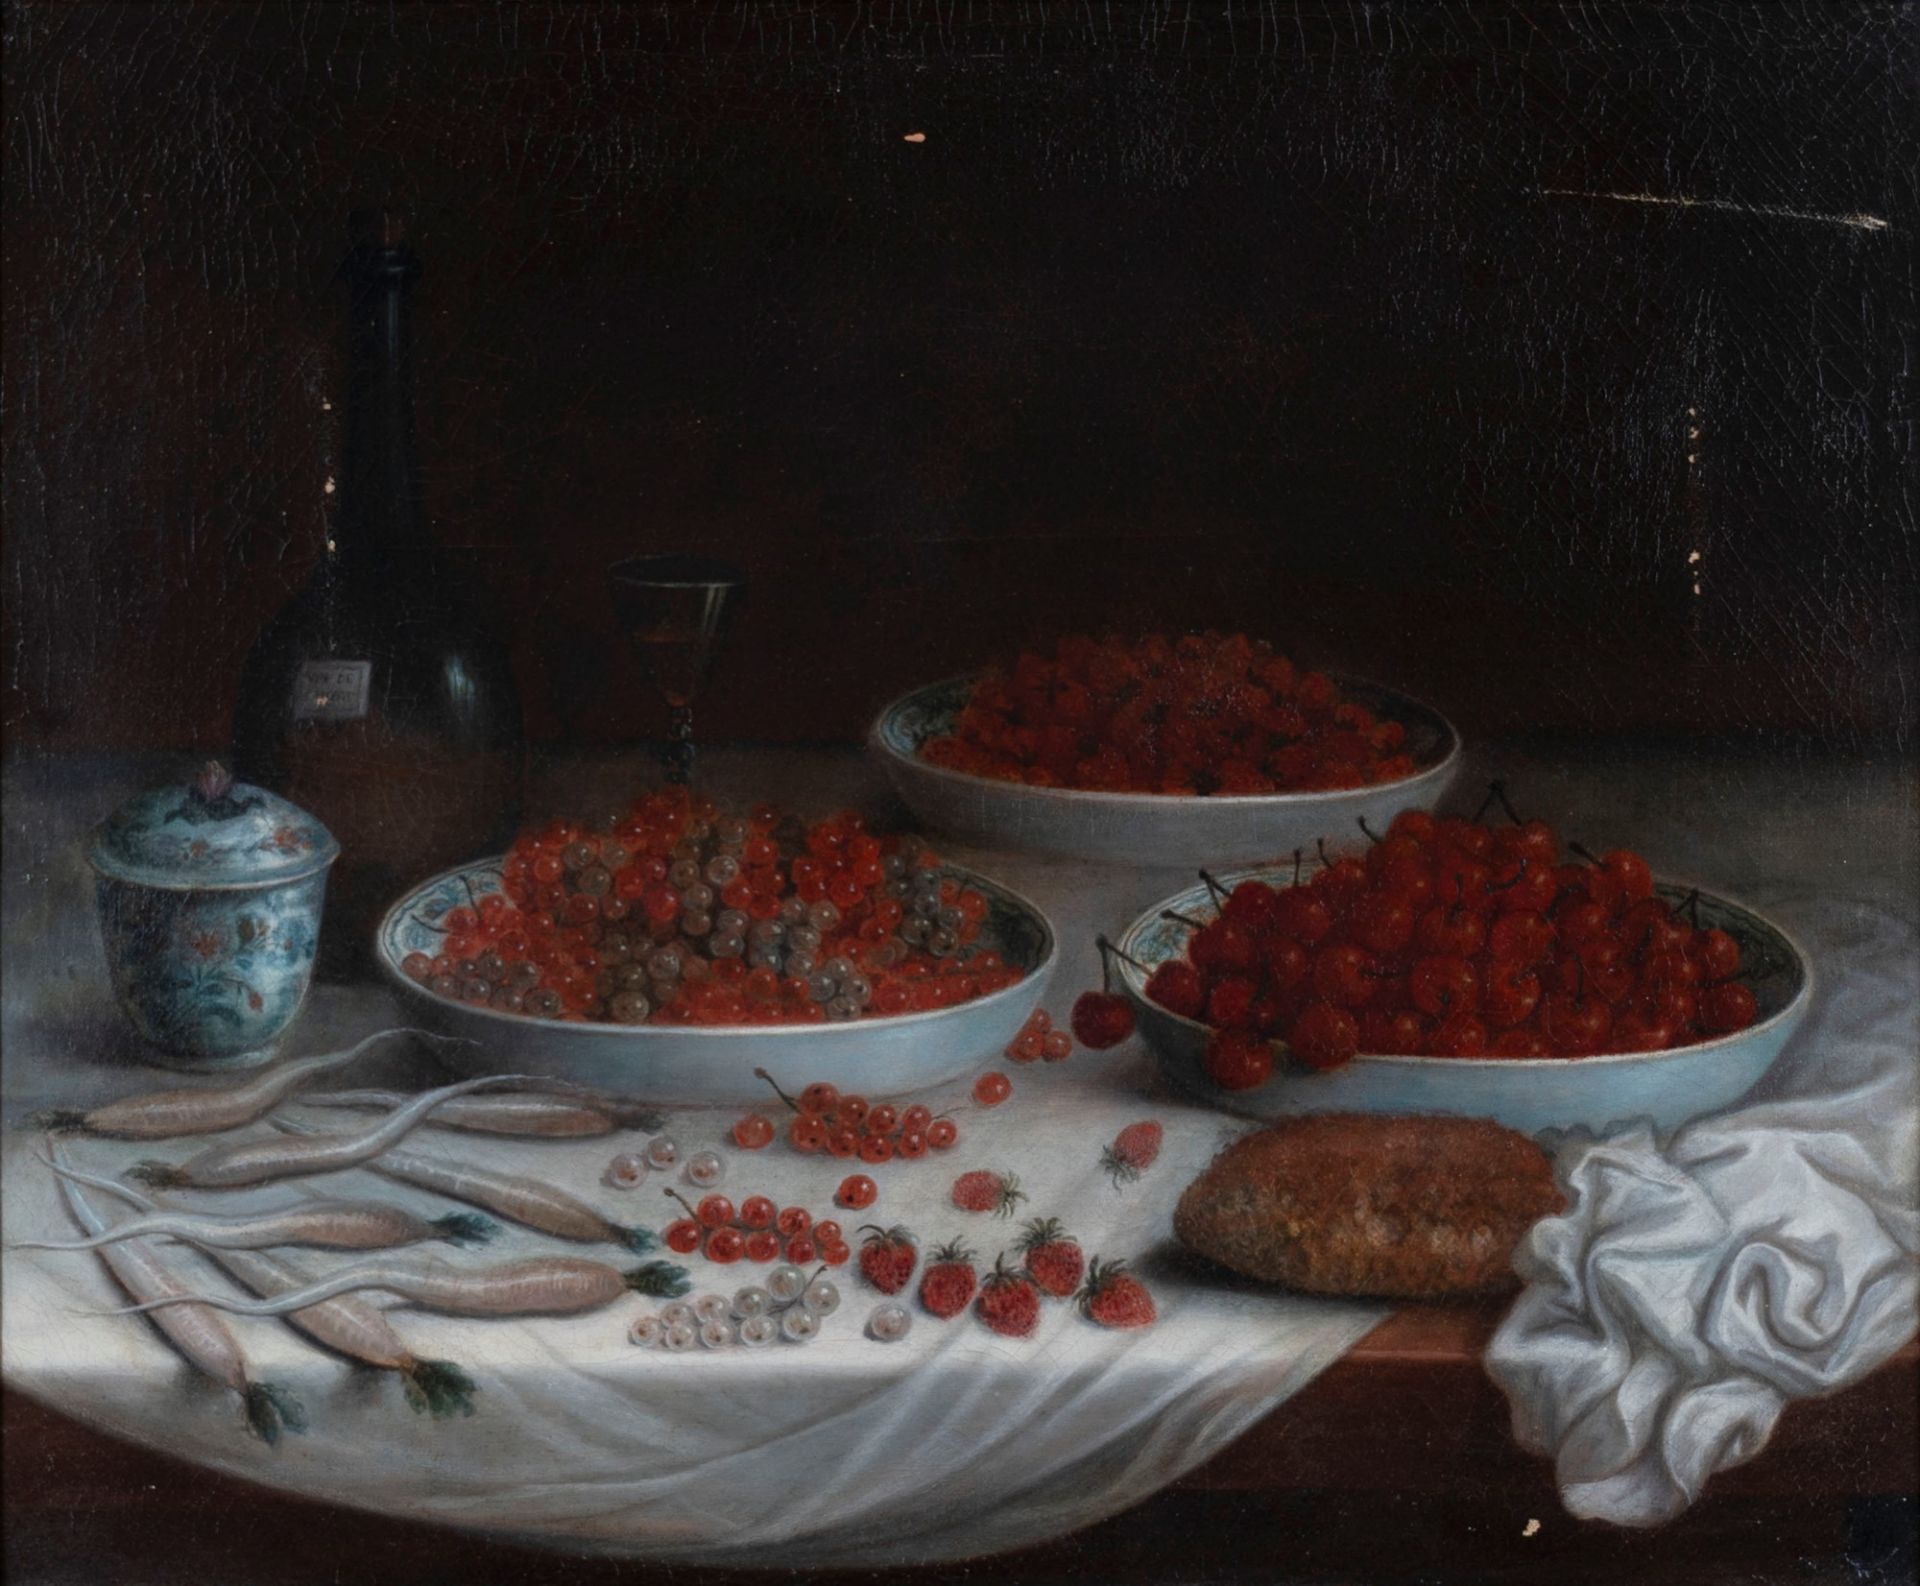 Flemish School, late seventeenth century - early eighteenth century - Strawberries, currants, cherri